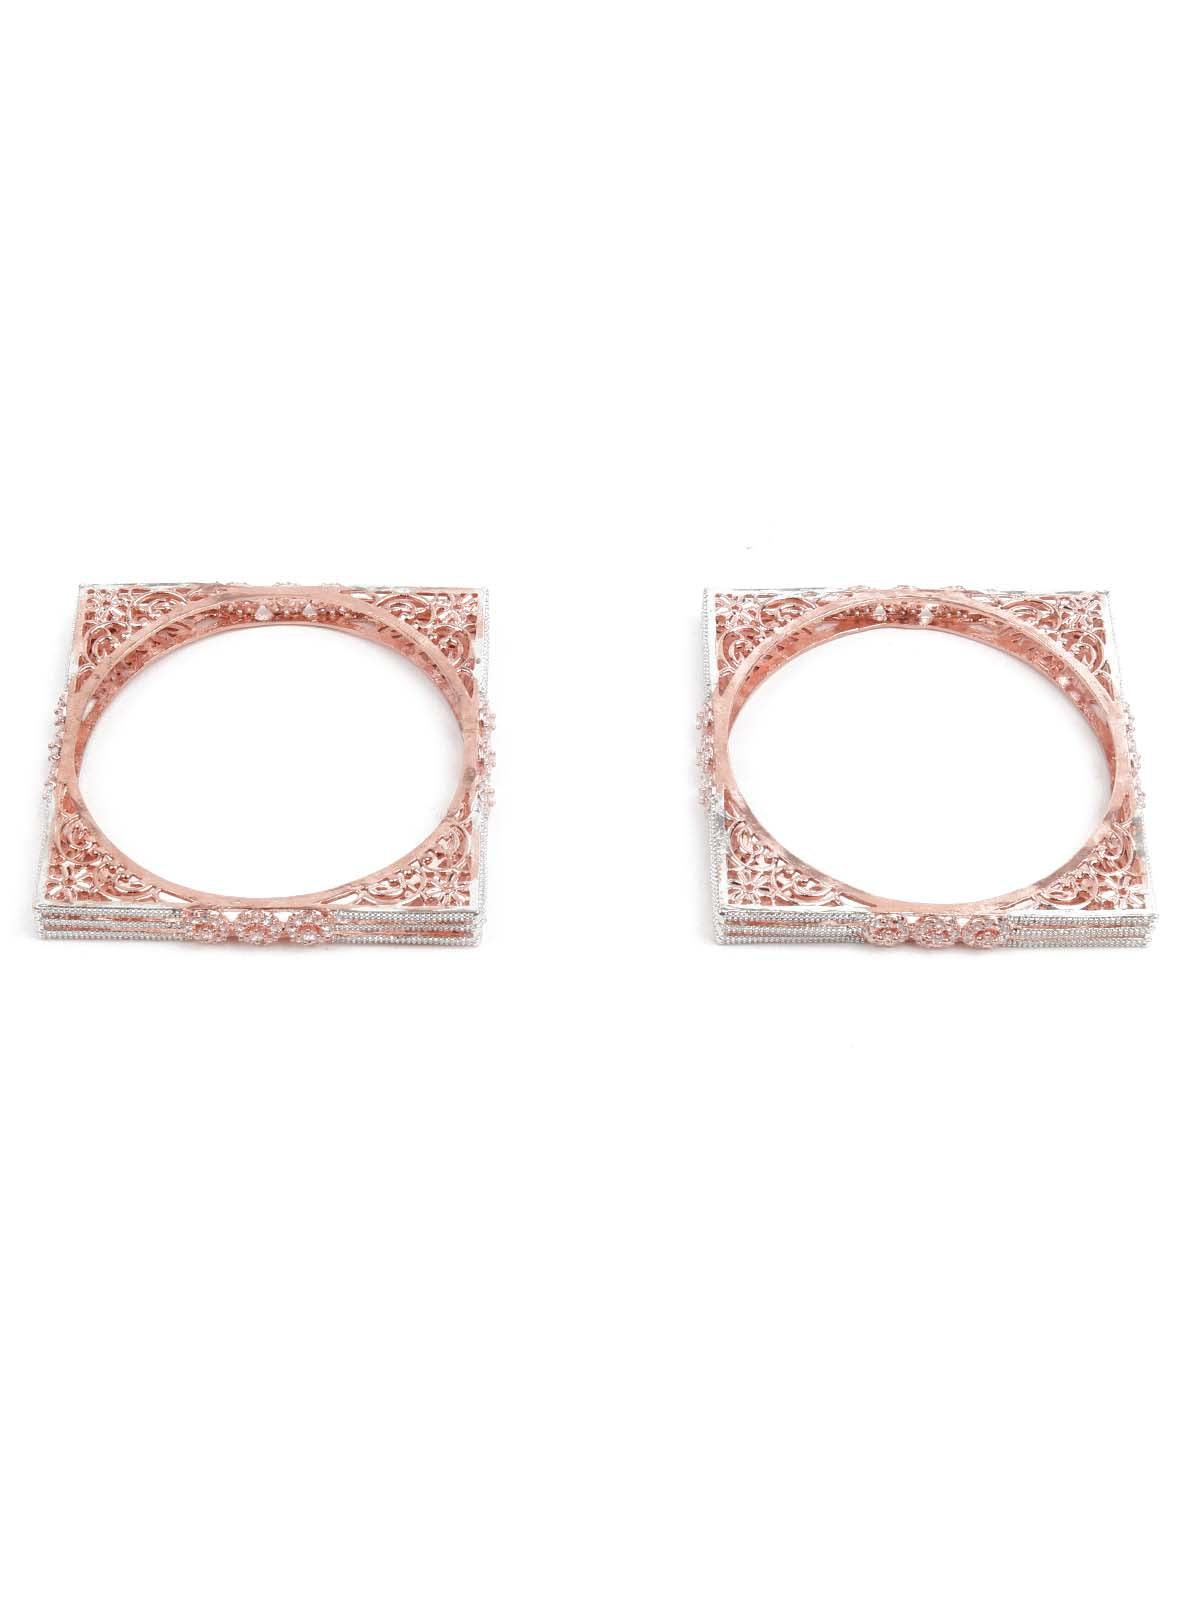 Women's Stylish Square Dual Tone Bracelets - Odette